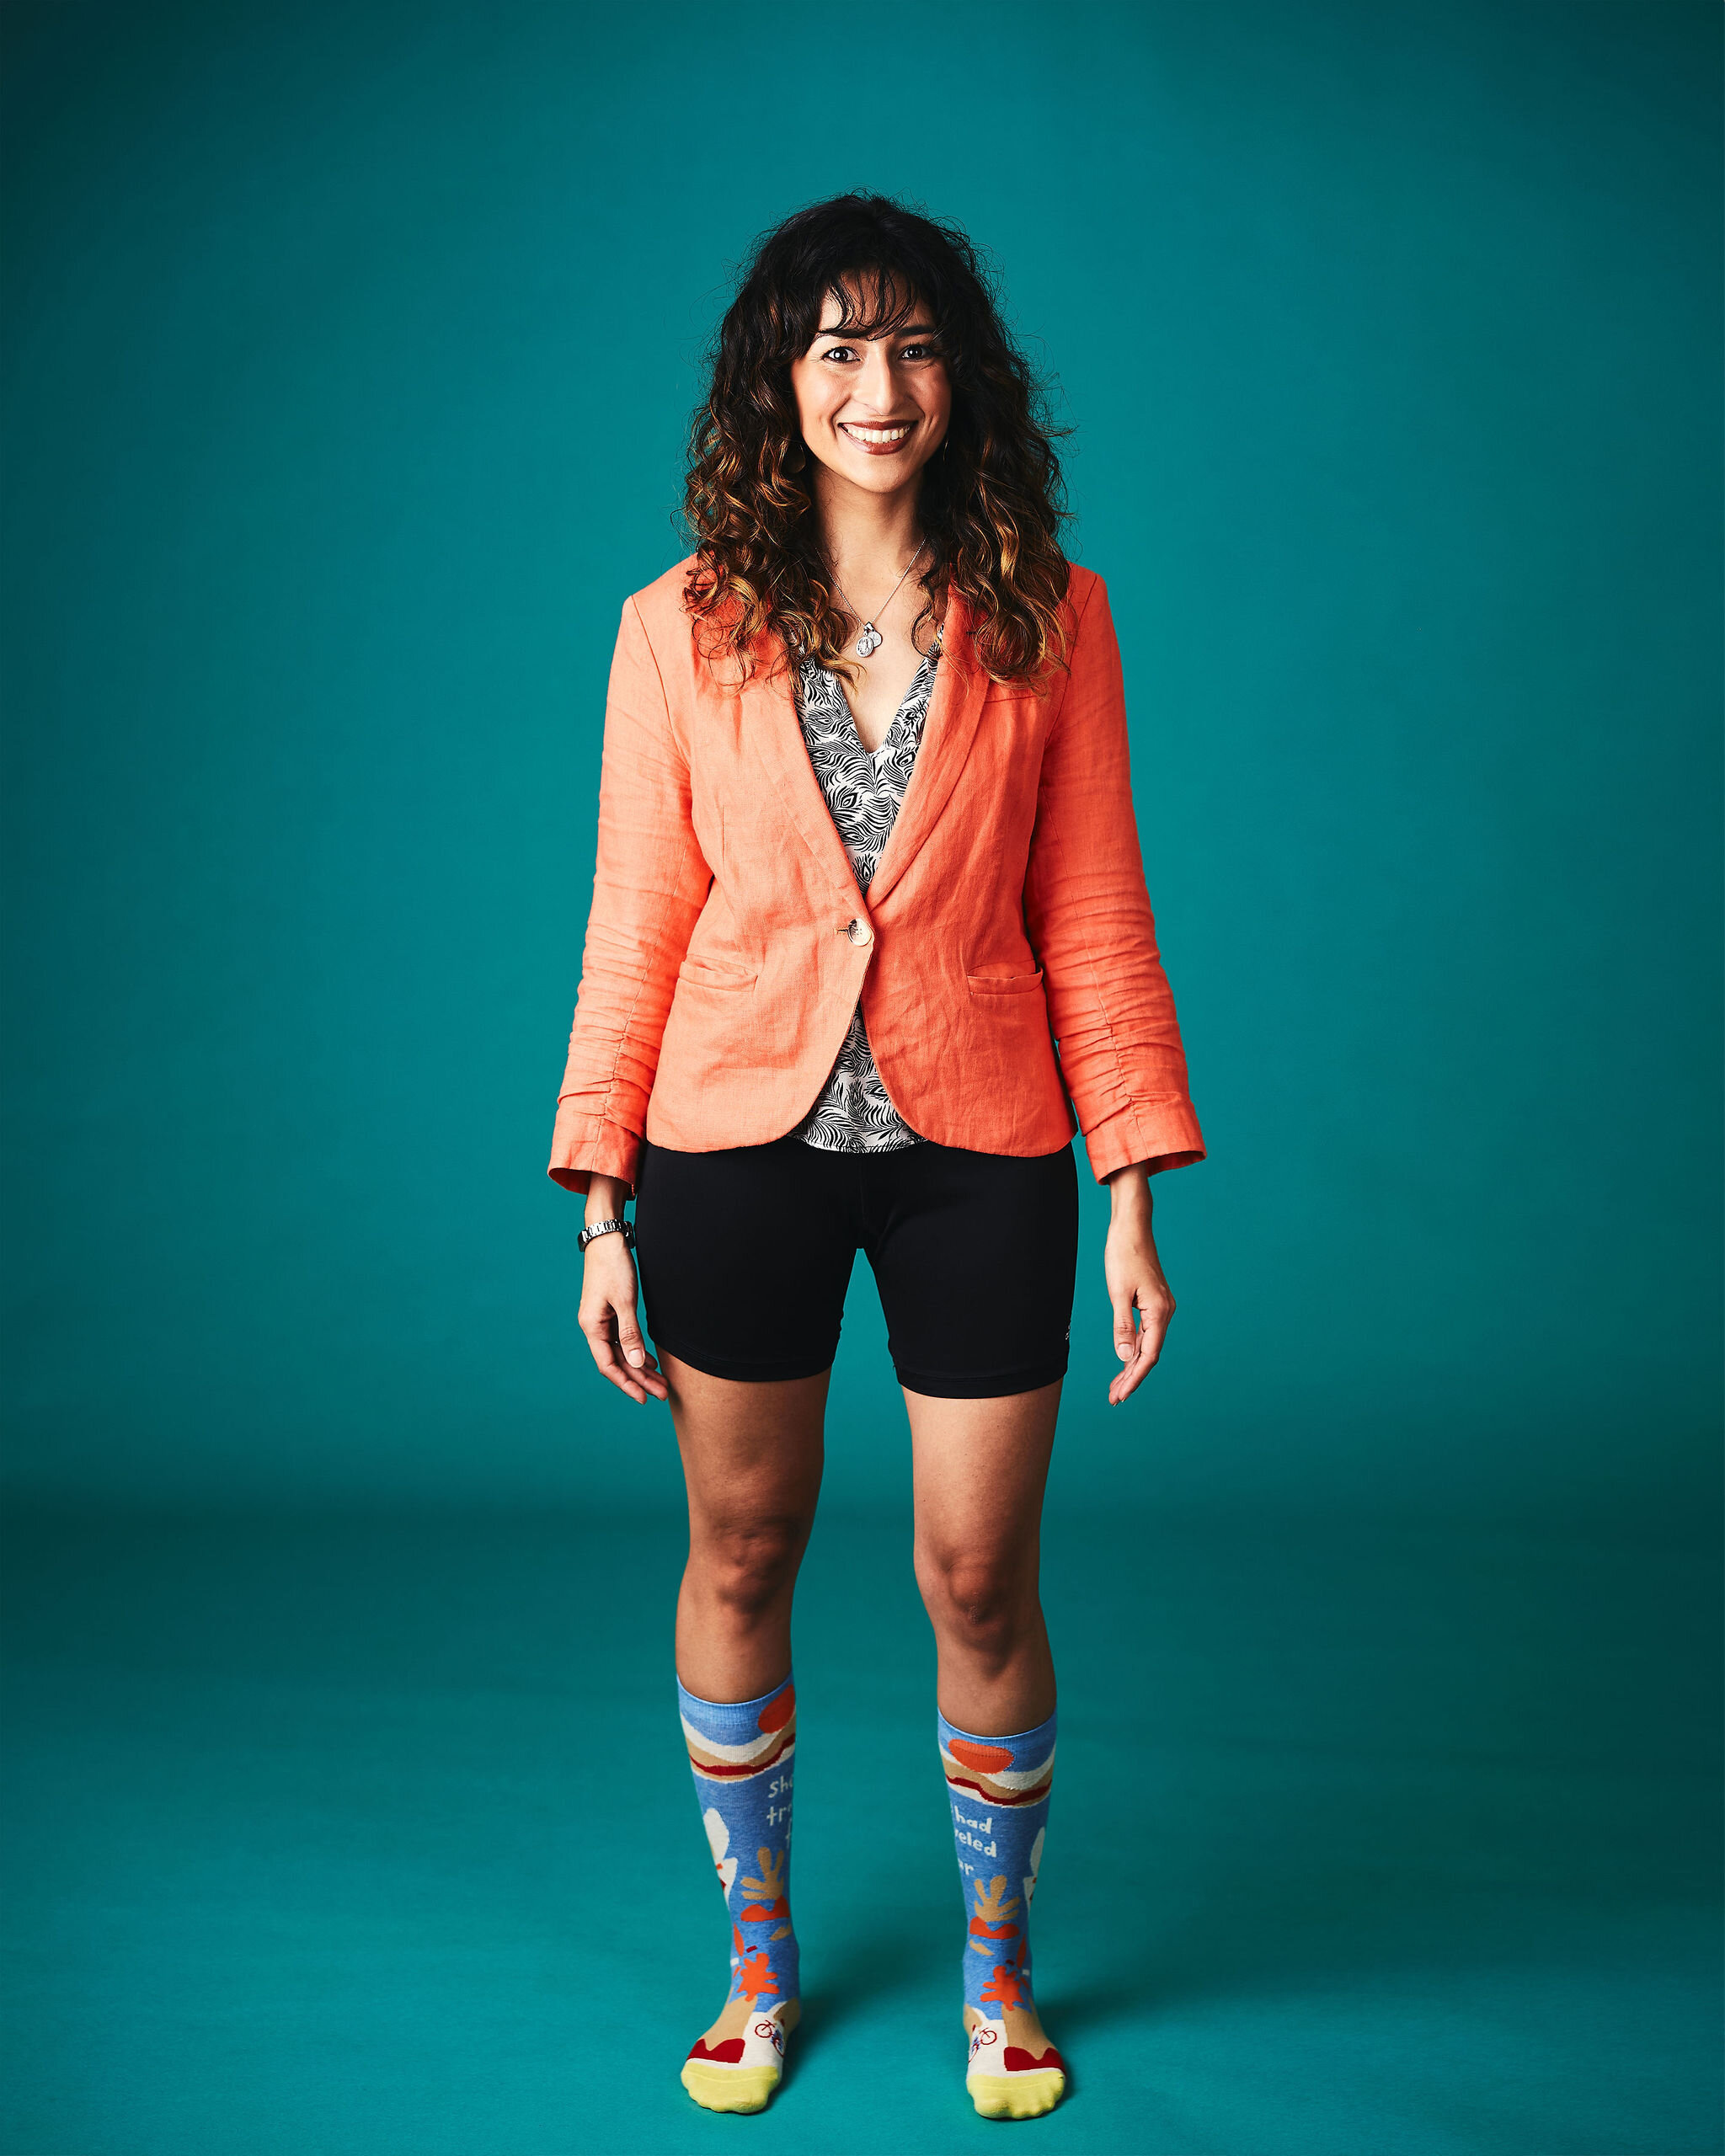 Meet Sabrina Torres // COVIDwear